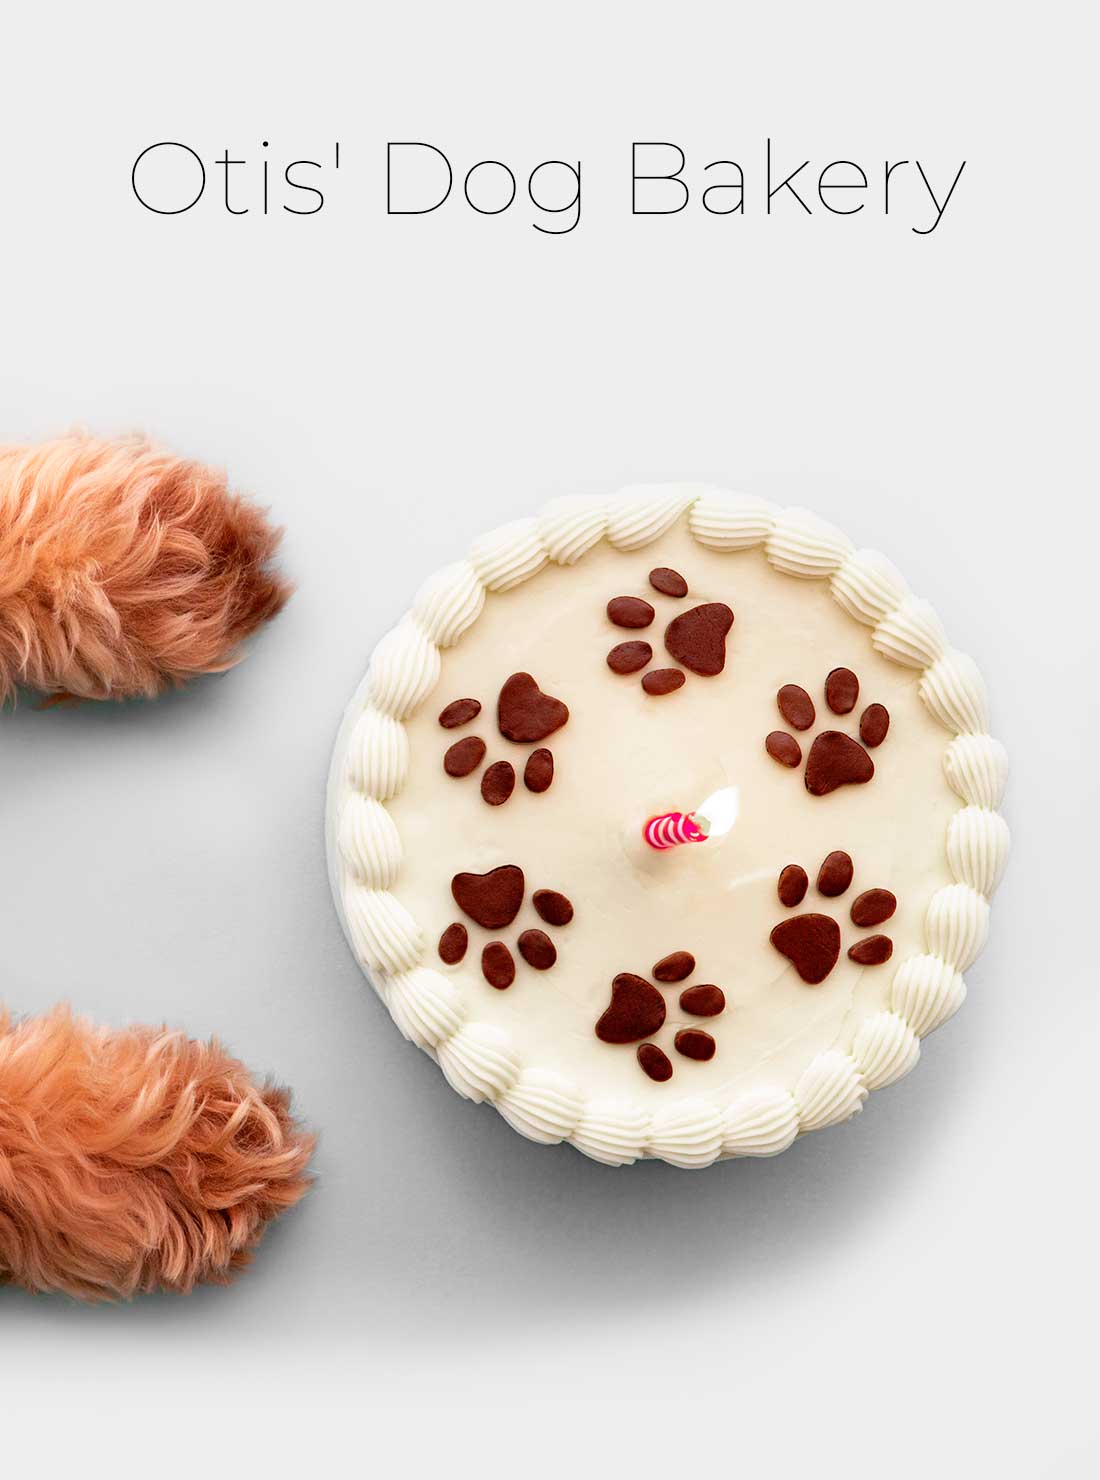 Otis' Dog Bakery